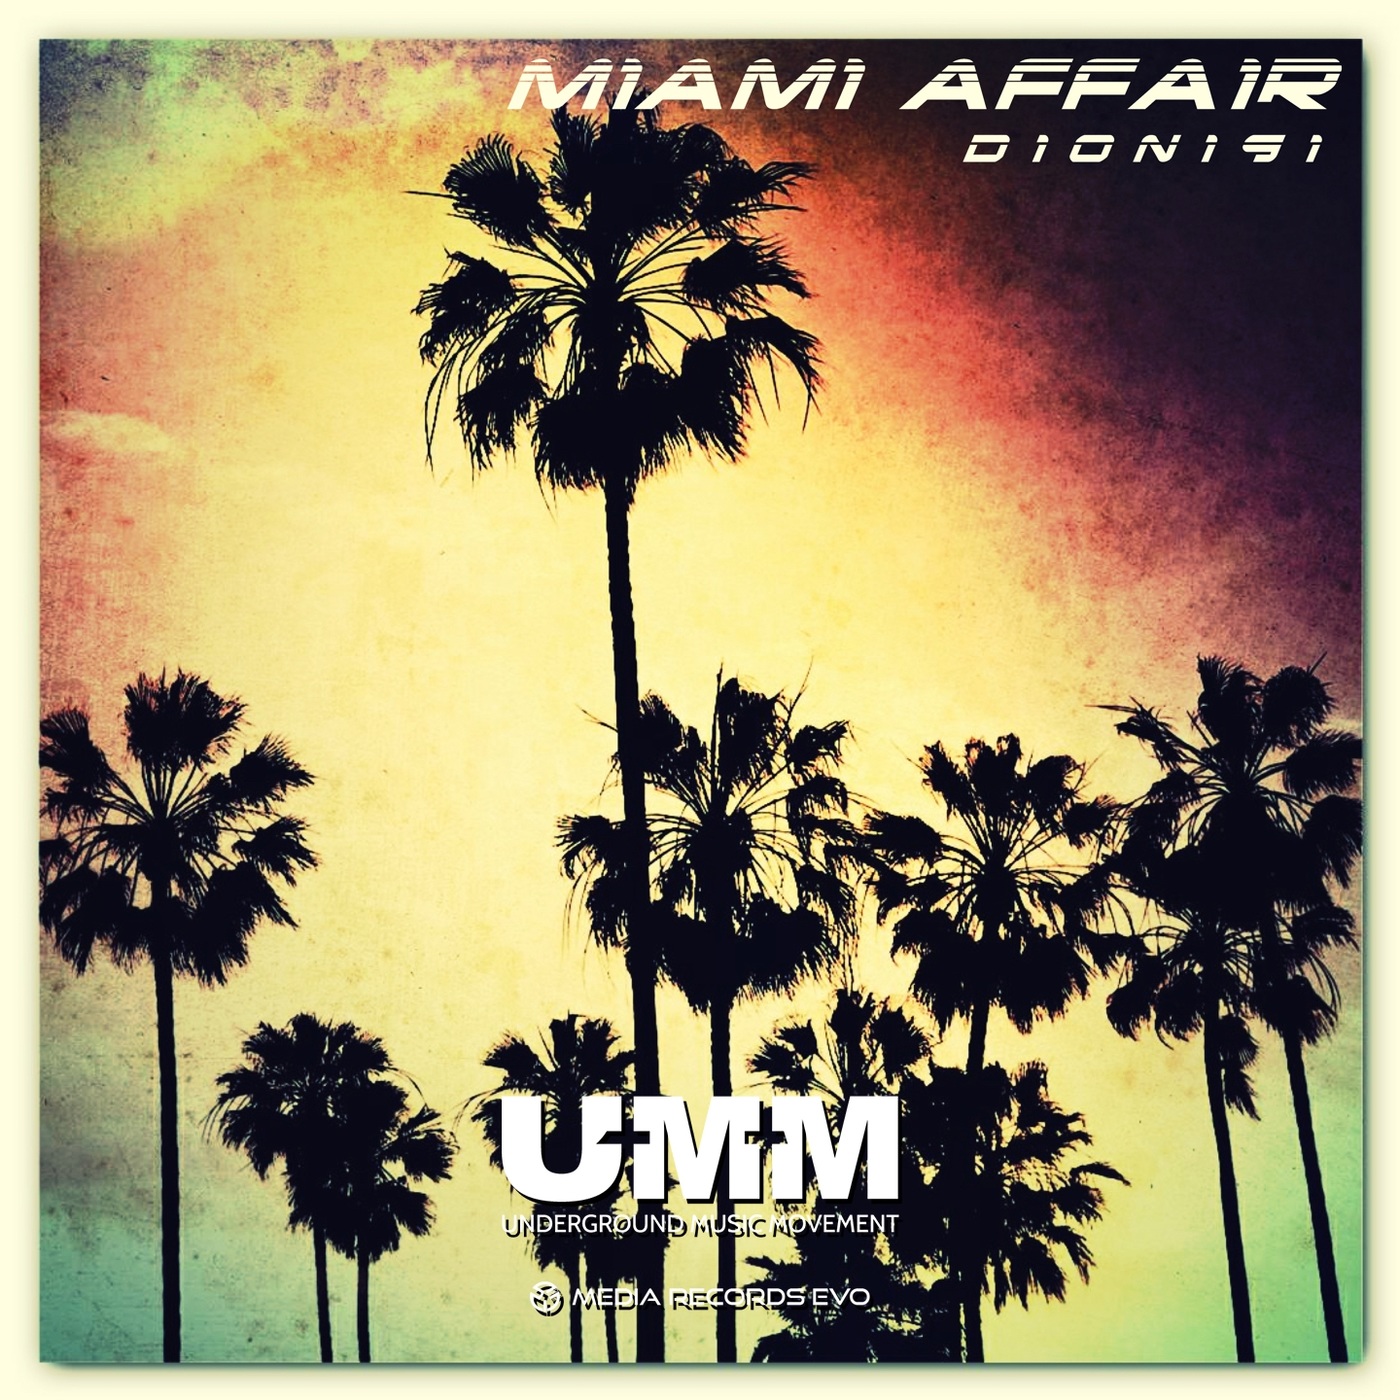 Dionigi - Miami Affair / UMM (Media Records)